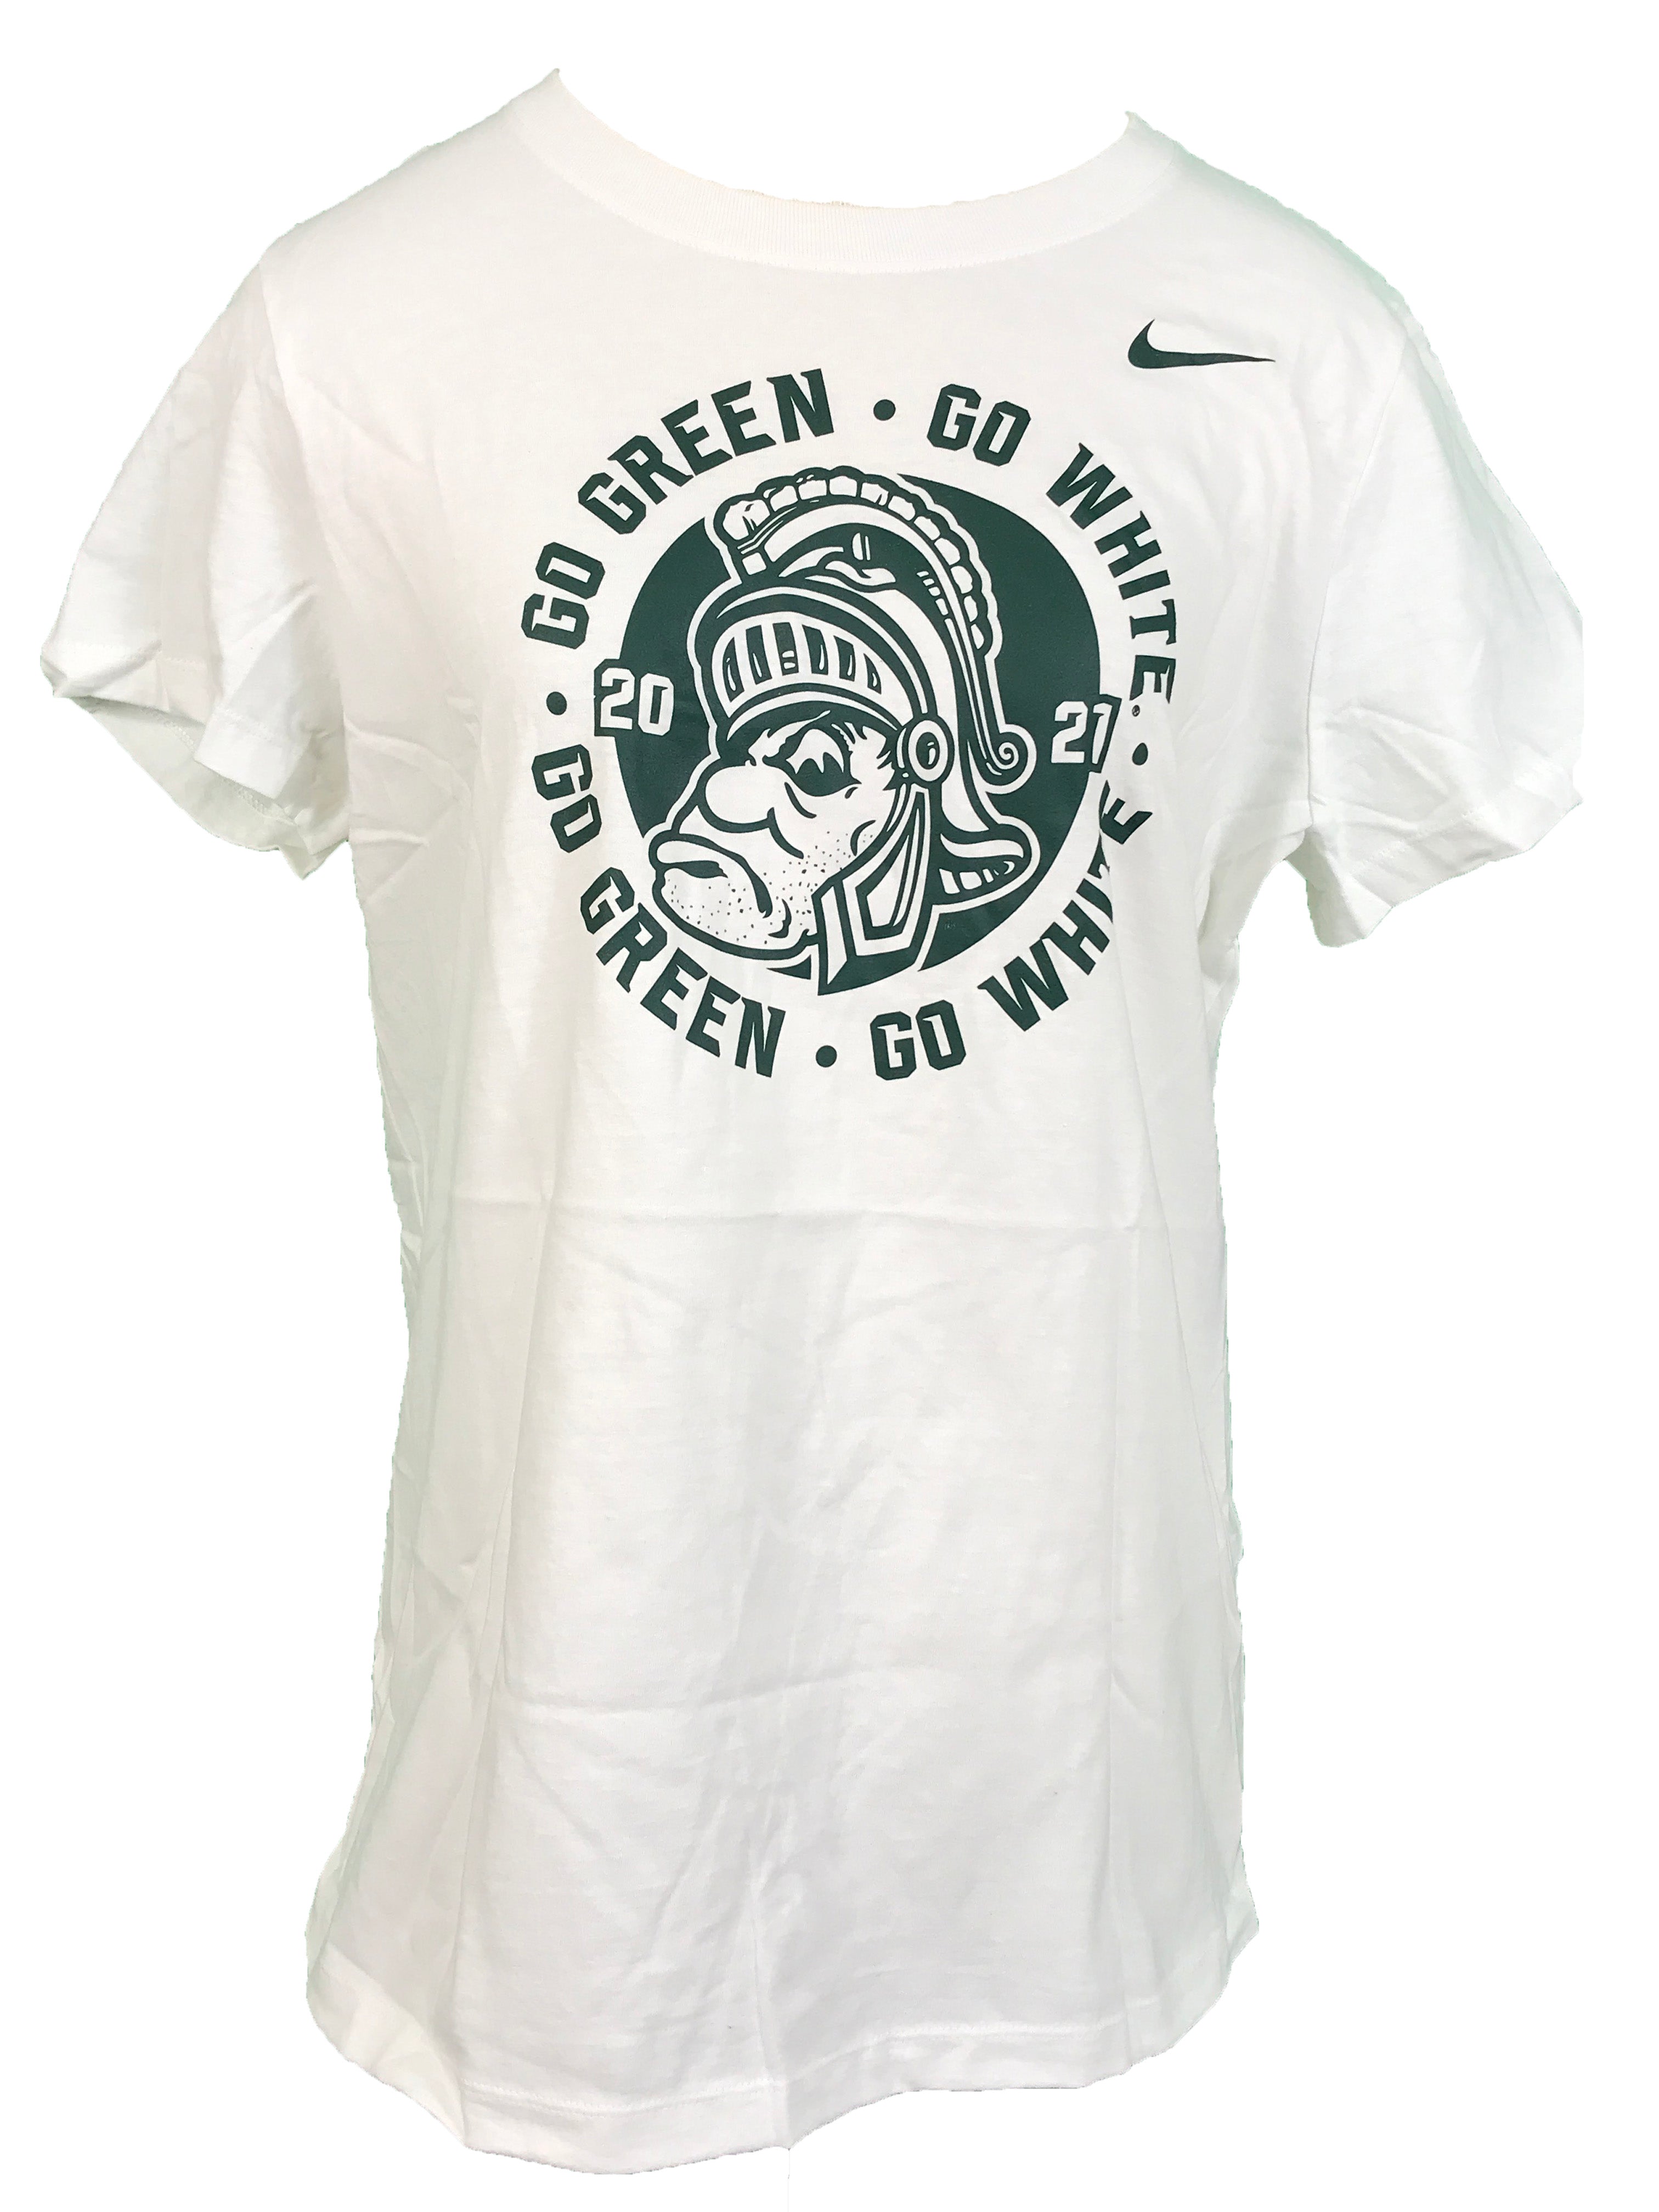 Nike White 2021 MSU Football T-Shirt Women's Size L